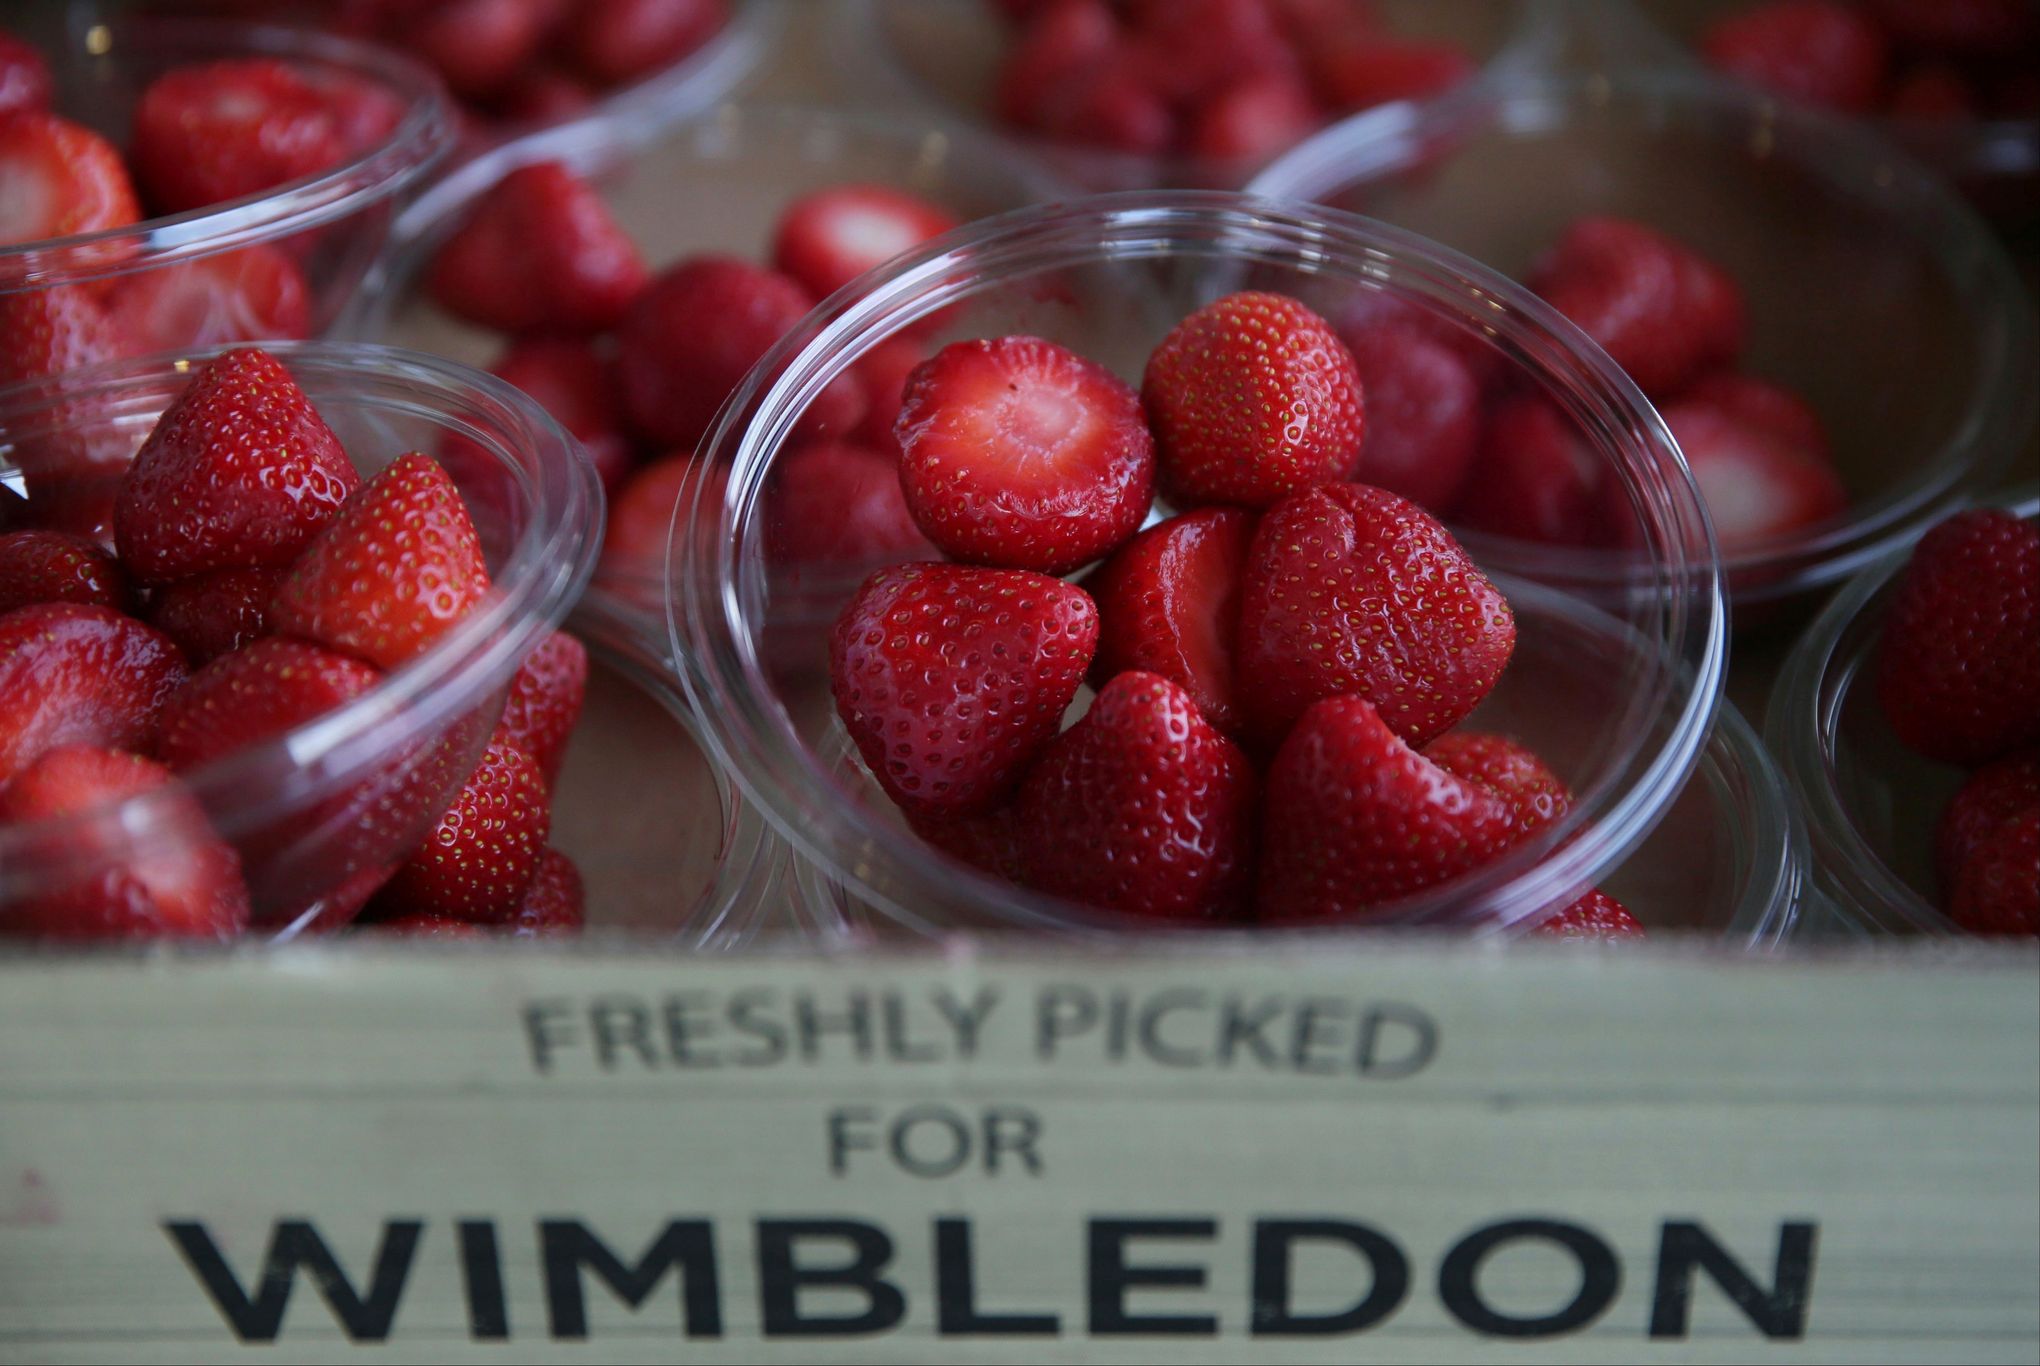 price of strawberries at wimbledon